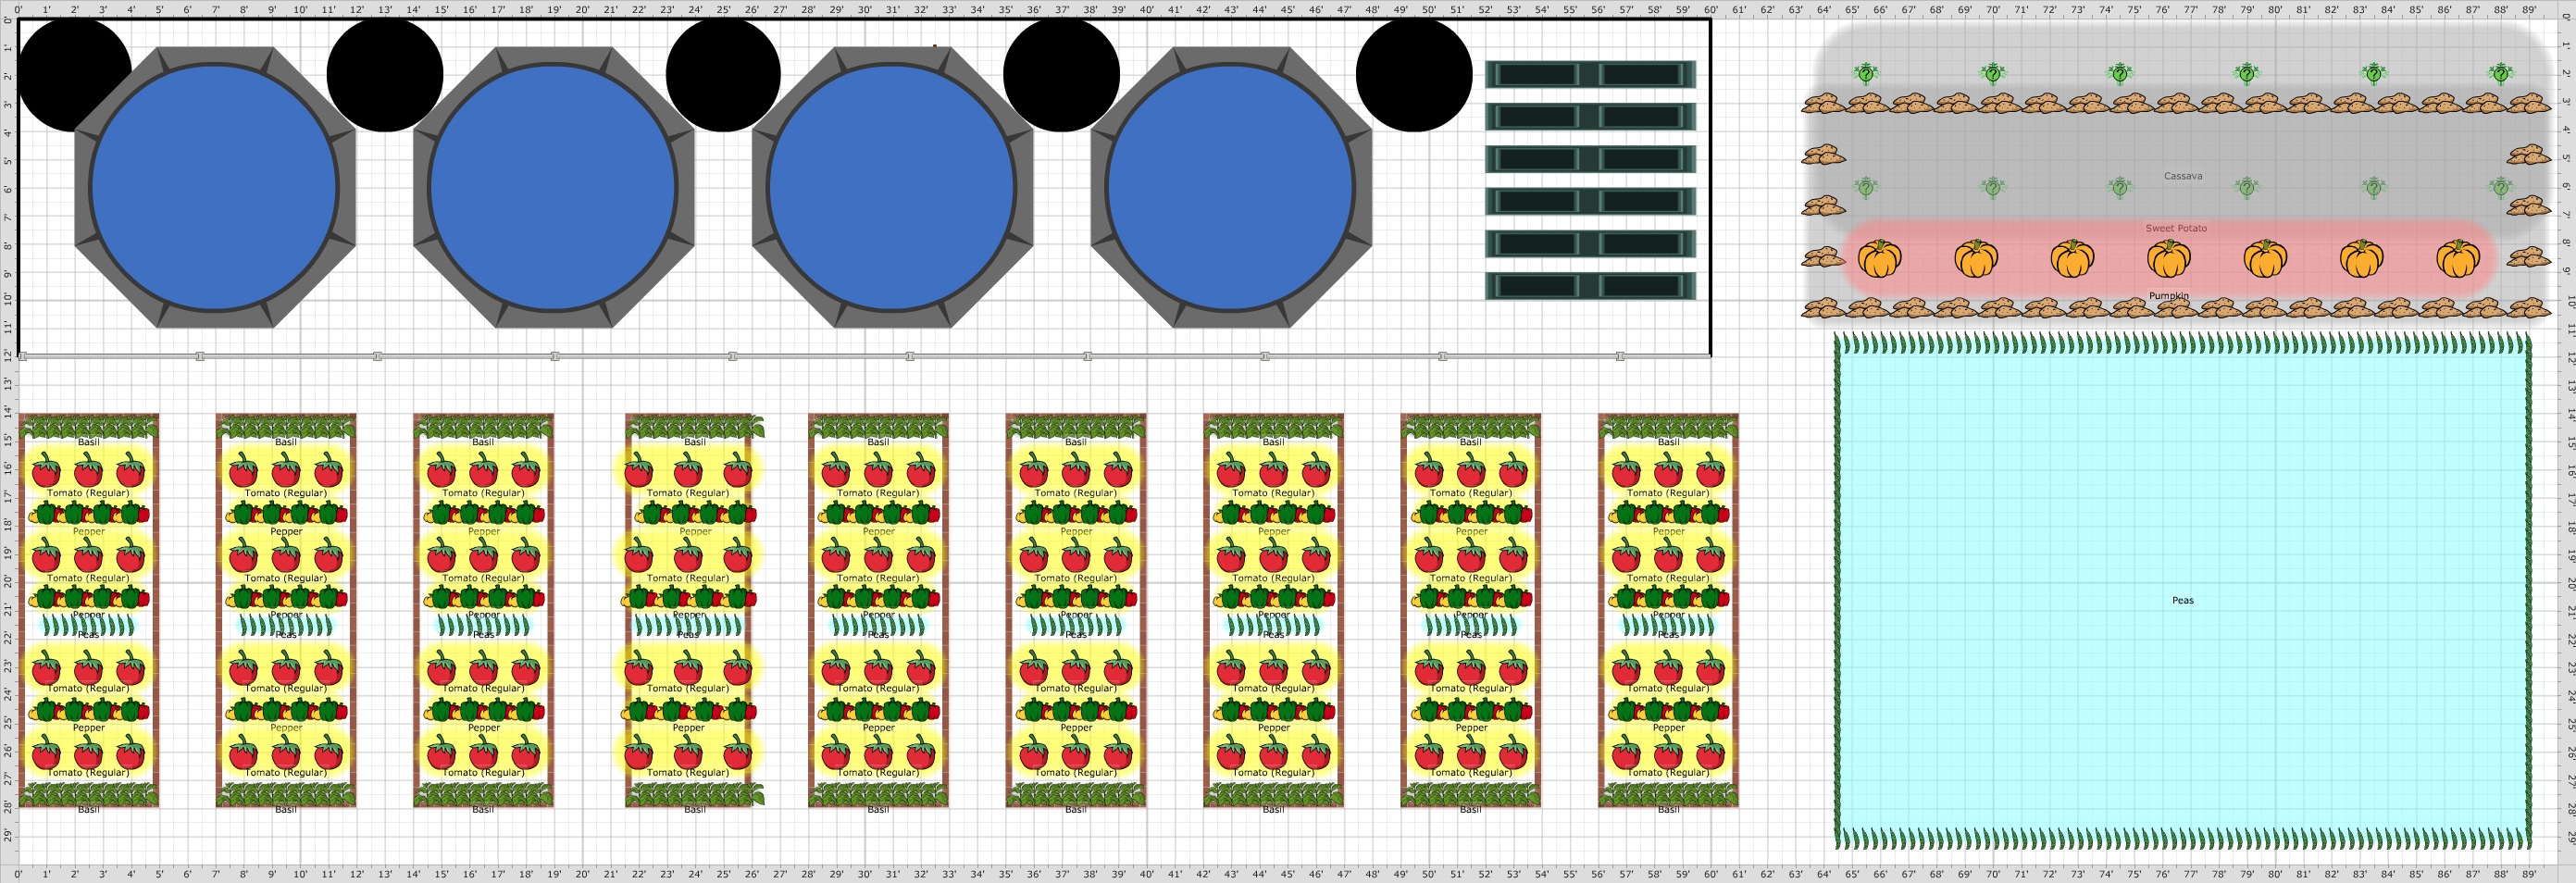 greenhouse optimal layout